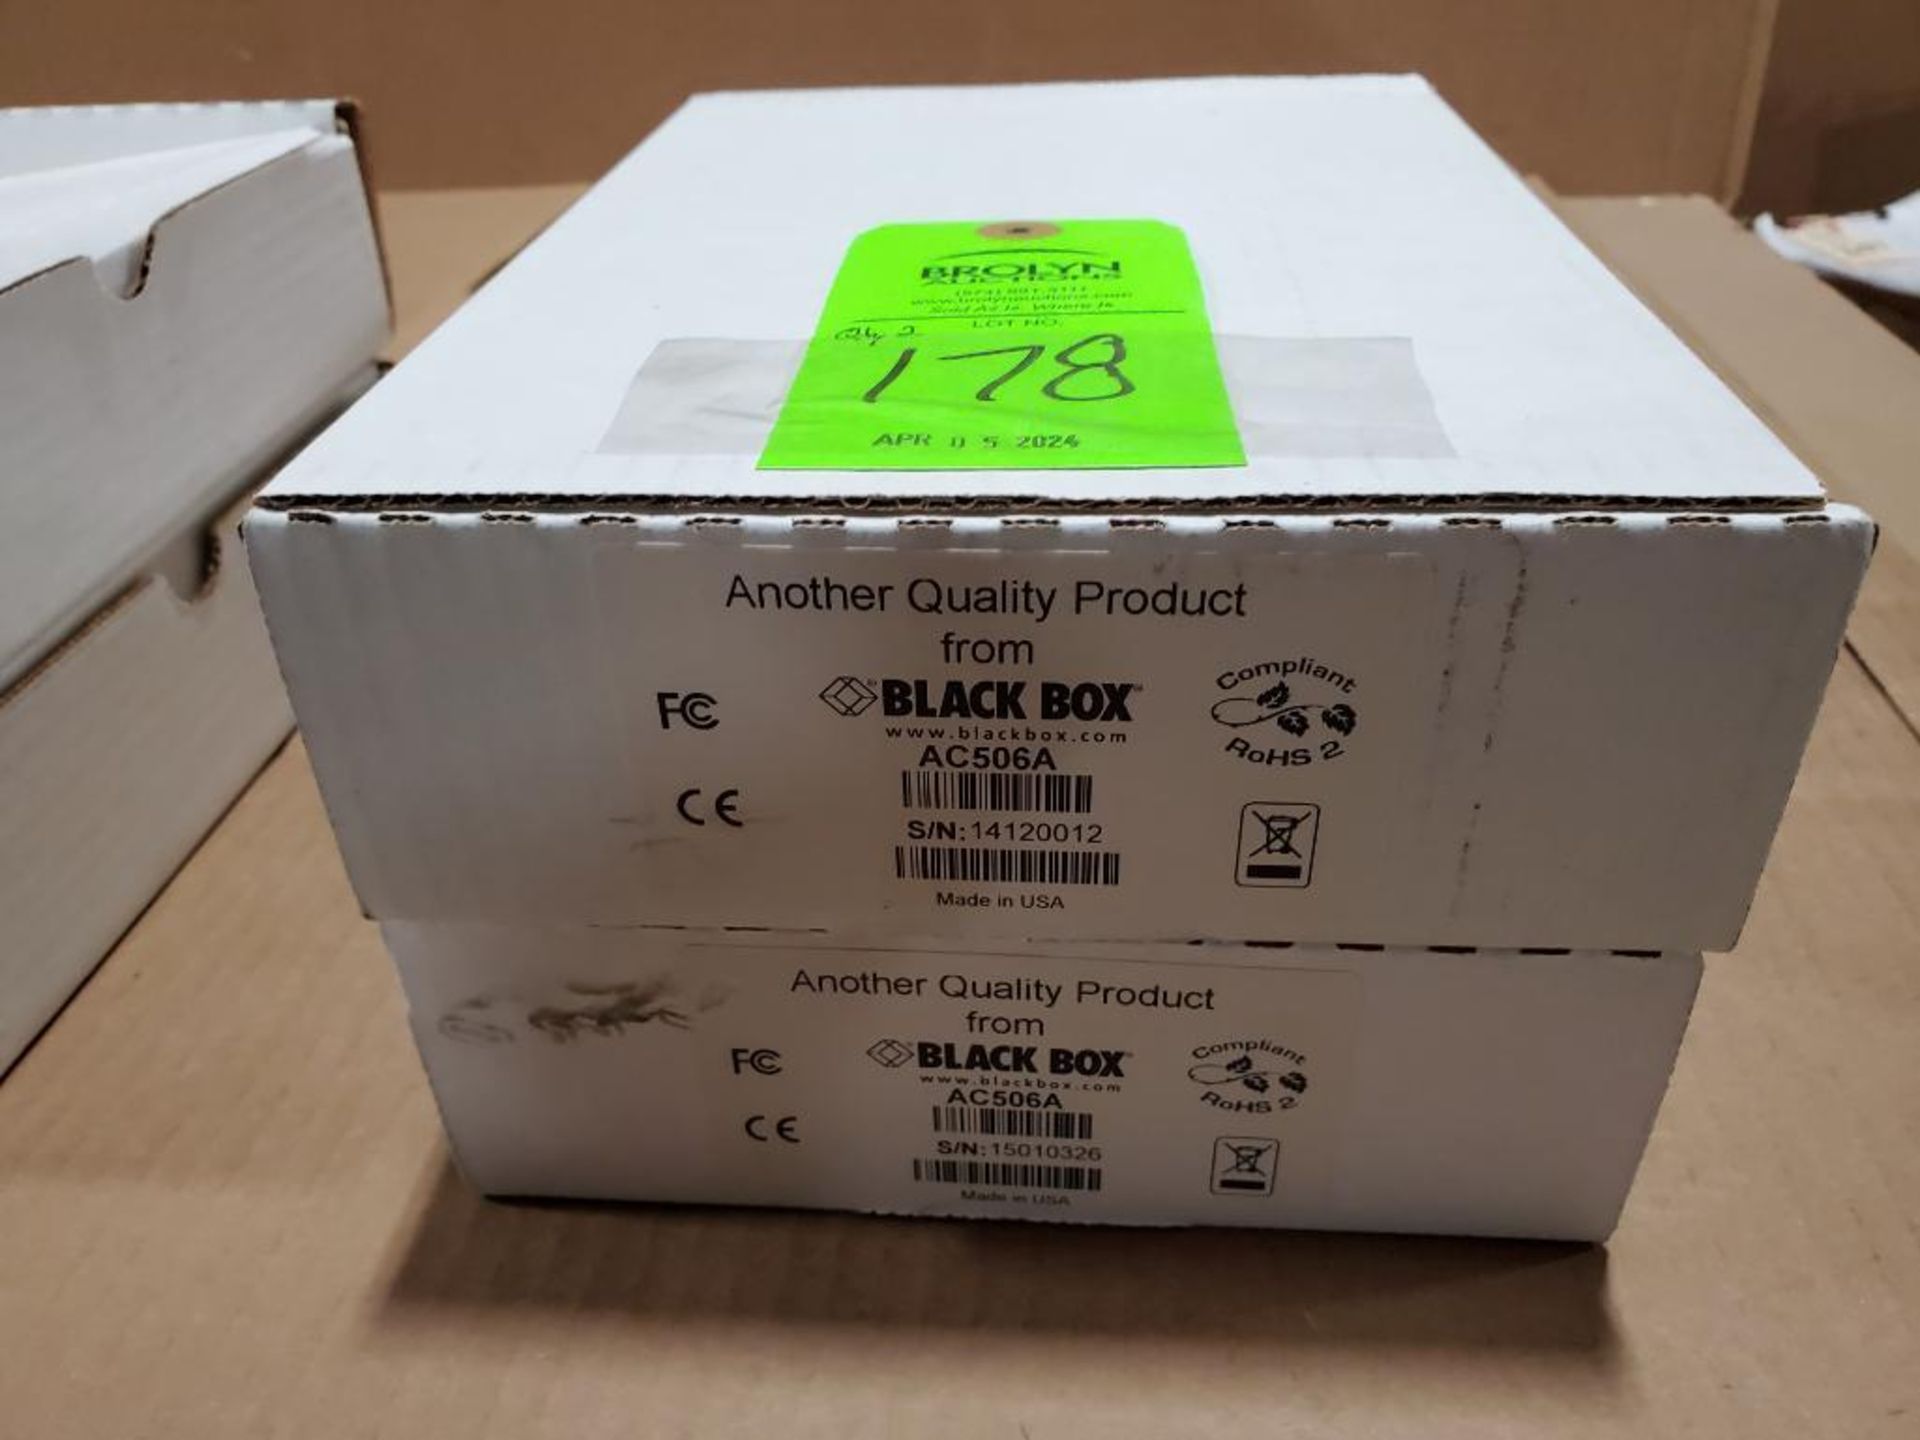 Qty 2 - Black Box splitter. Part number AC650A.